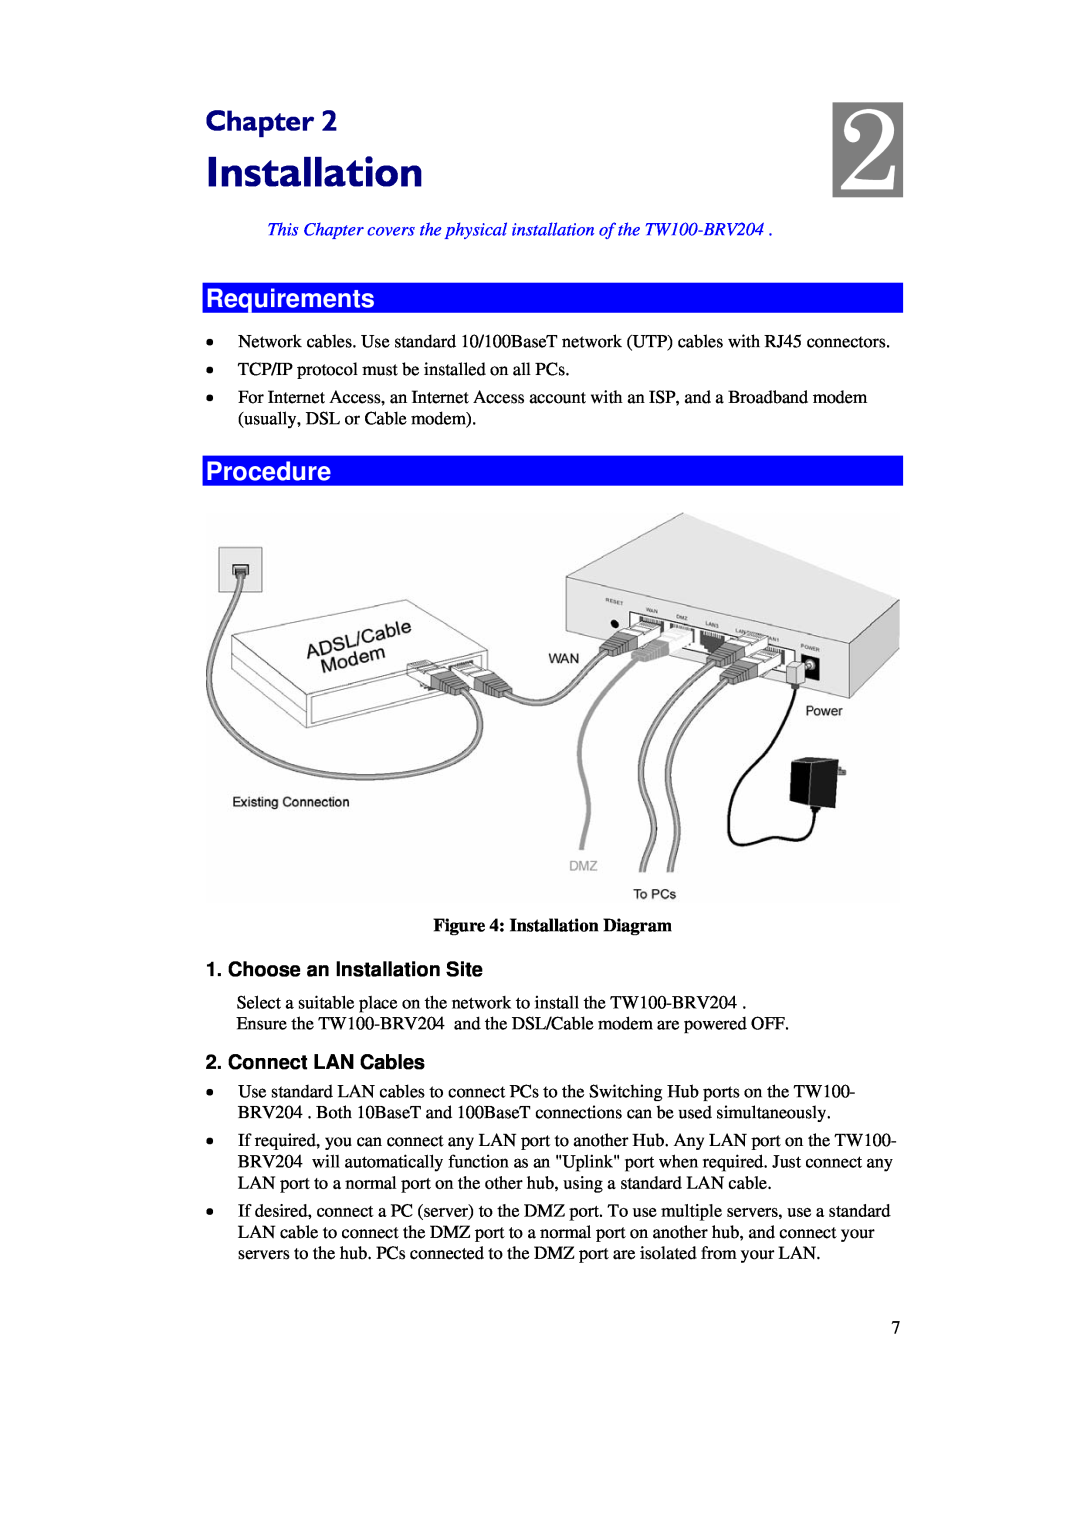 TRENDnet BRV204 manual Requirements, Procedure, Chapter, Installation Diagram 